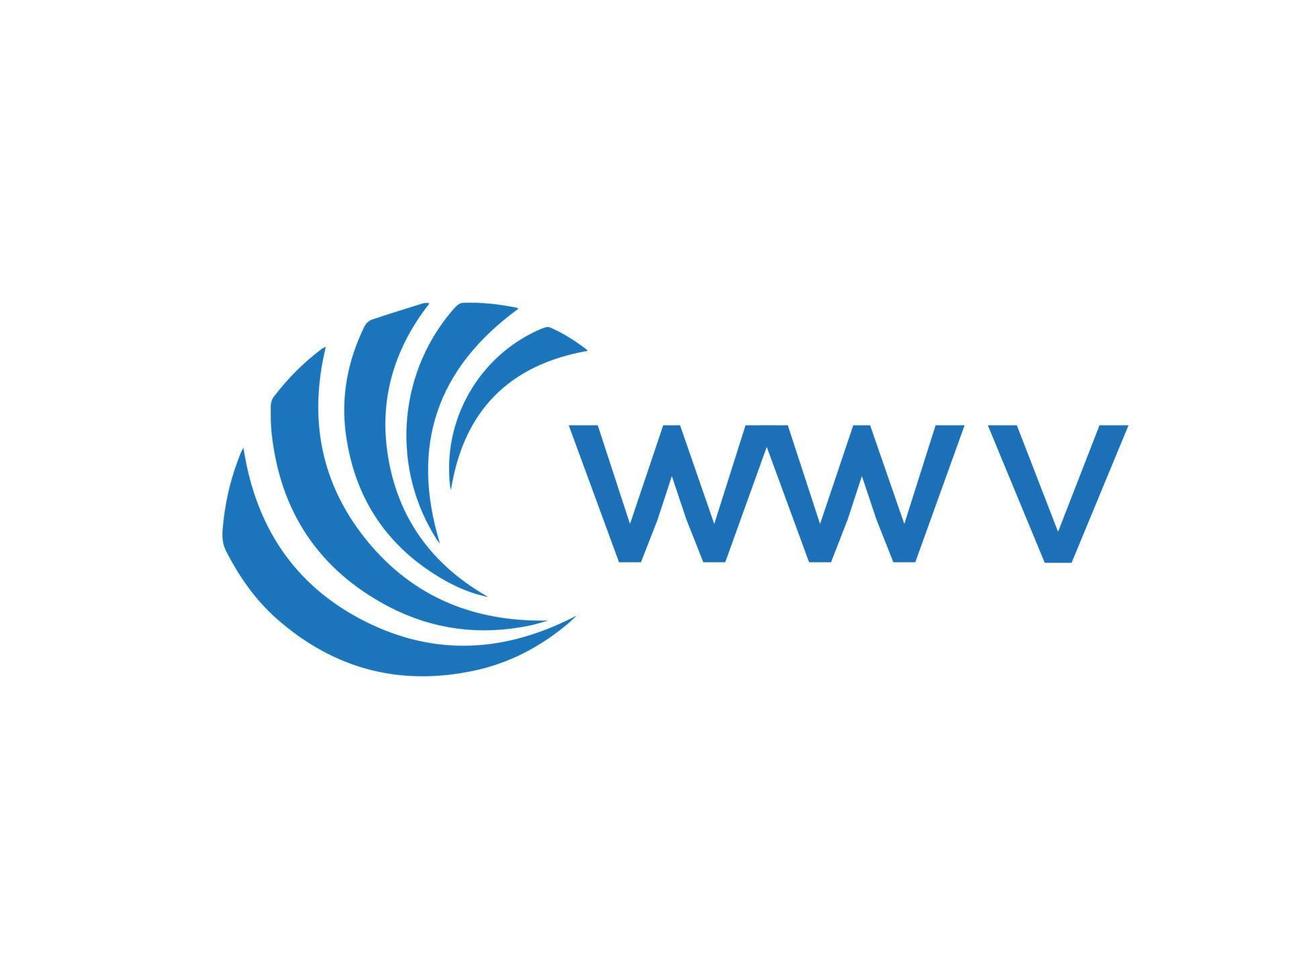 www letra logo diseño en blanco antecedentes. www creativo circulo letra logo concepto. www letra diseño. vector